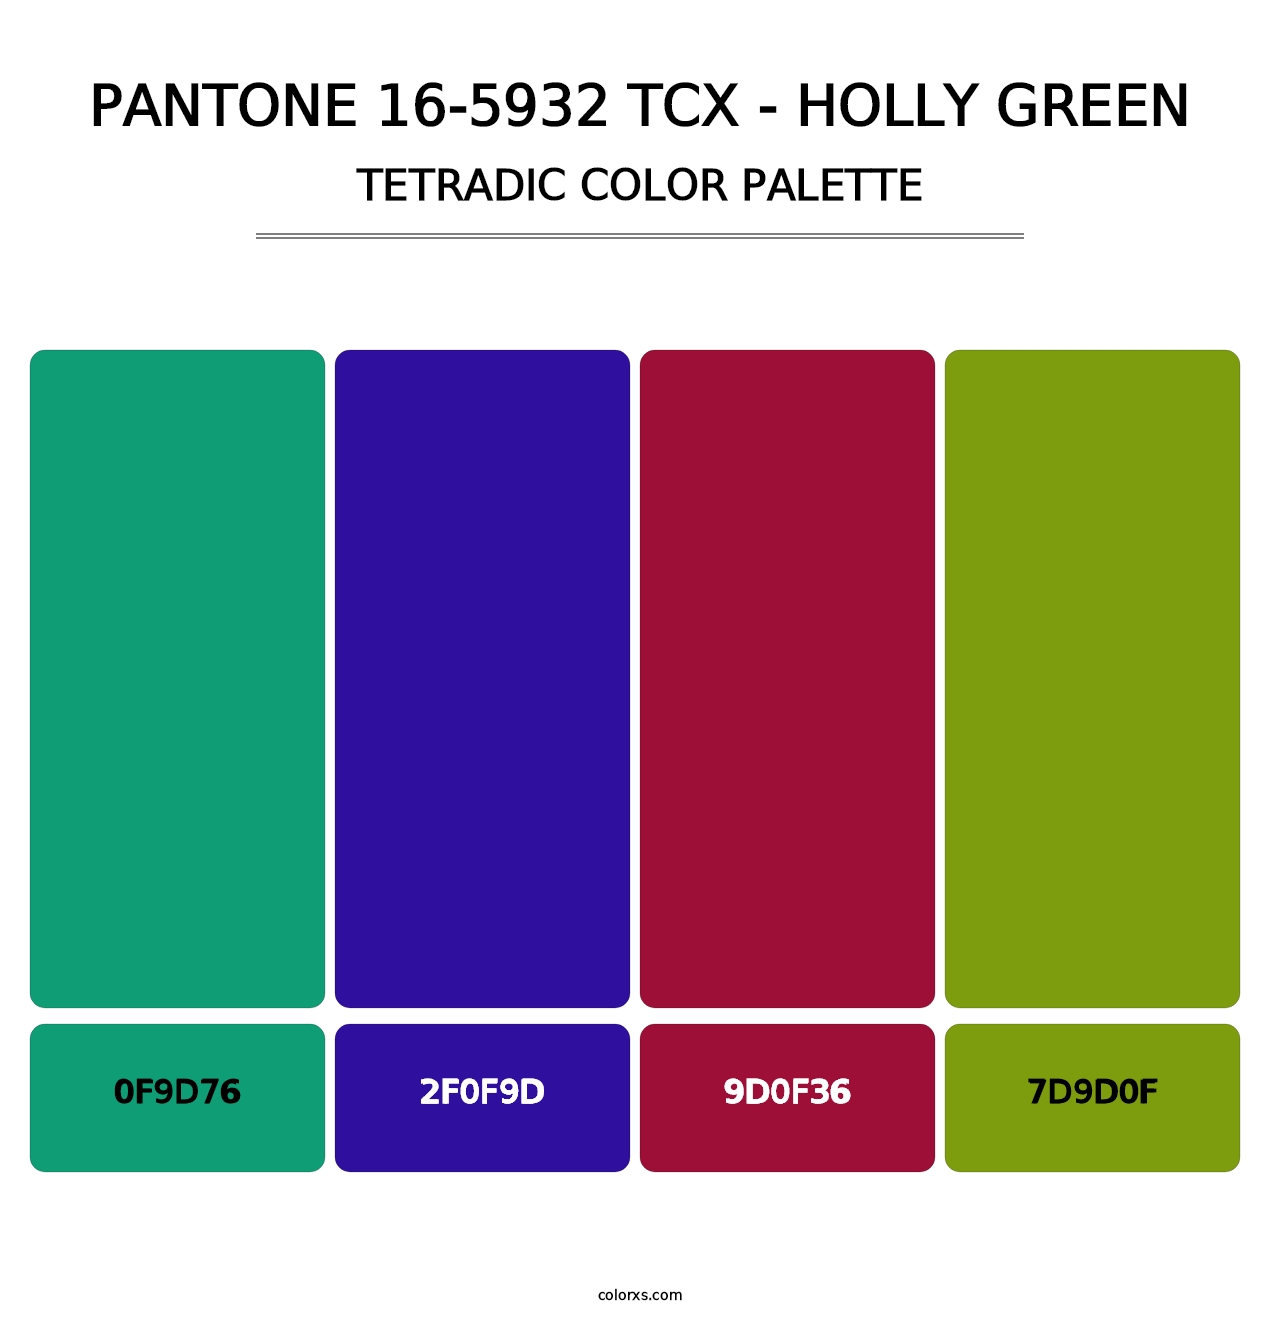 PANTONE 16-5932 TCX - Holly Green - Tetradic Color Palette